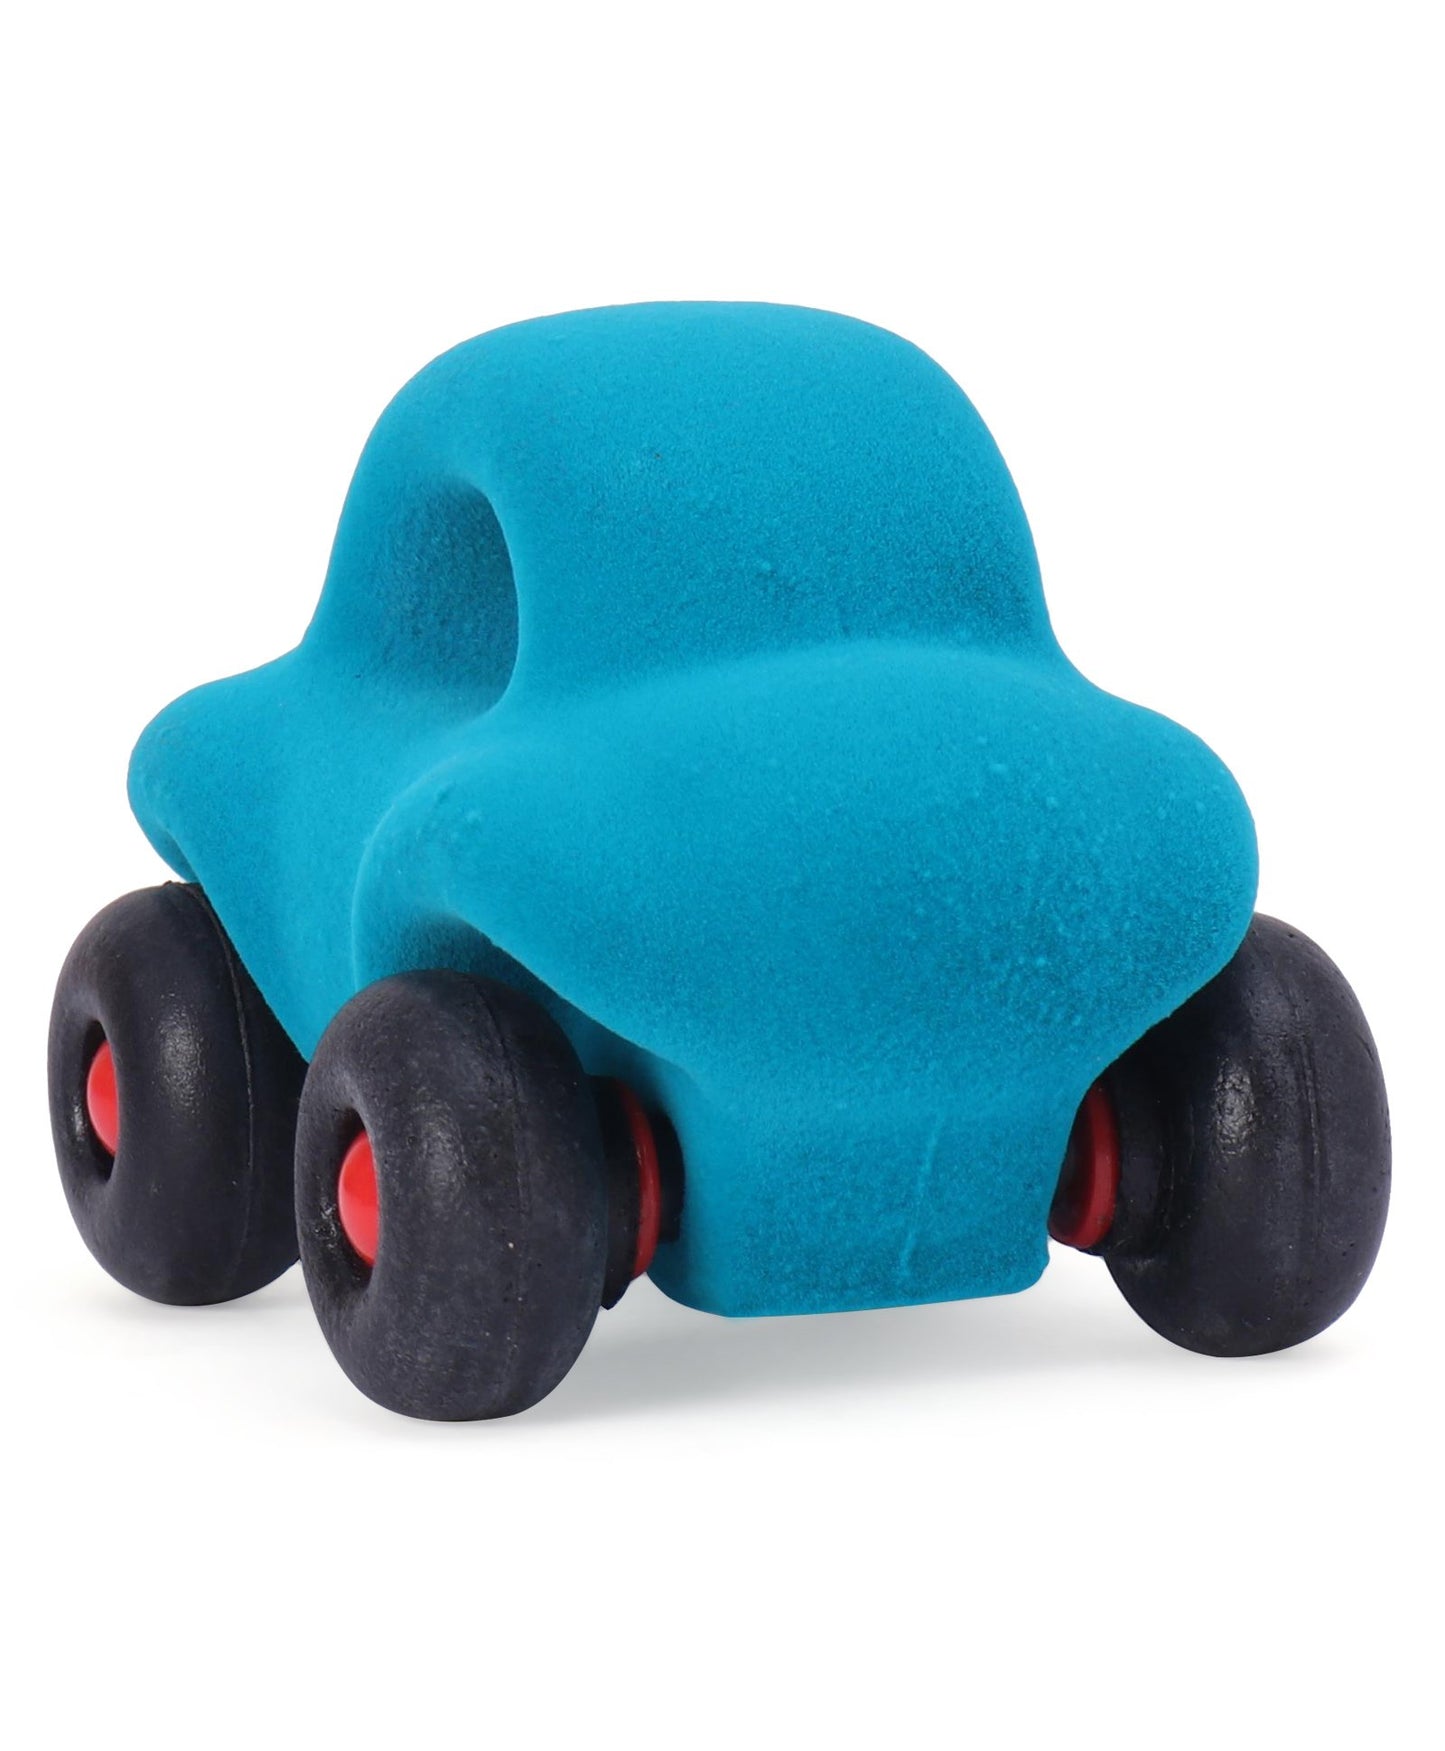 Foam Little Vehicles - Pack of 8